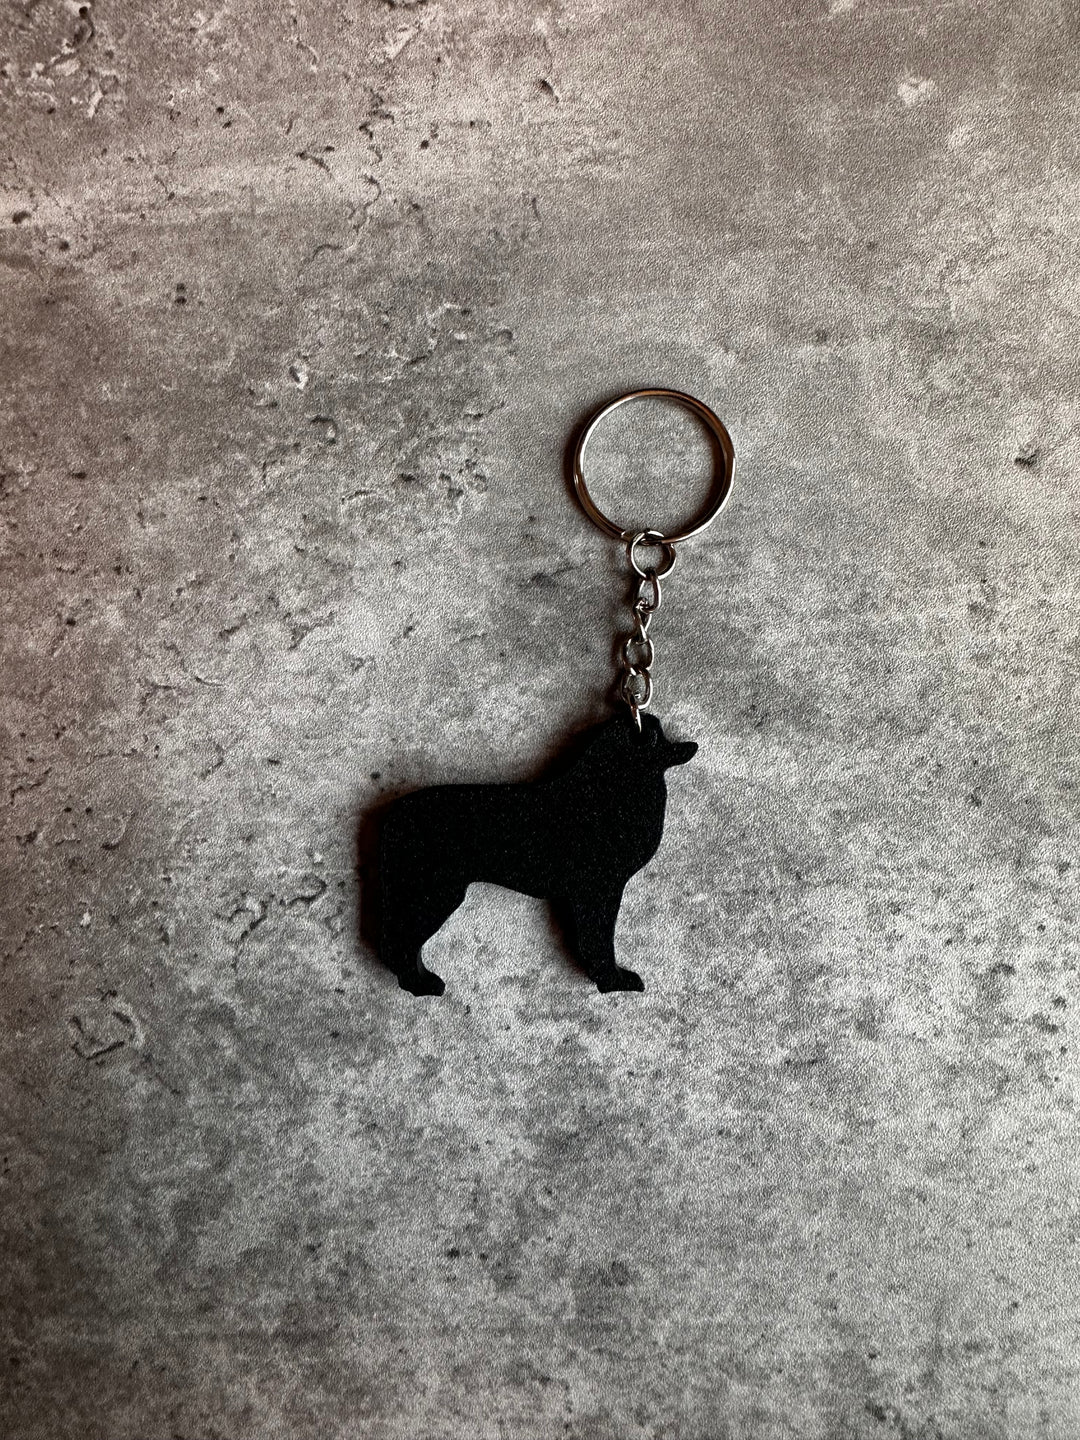 leonburger Dog Keyring Stl File.| 3D Printed | Unique Personalised Gifts